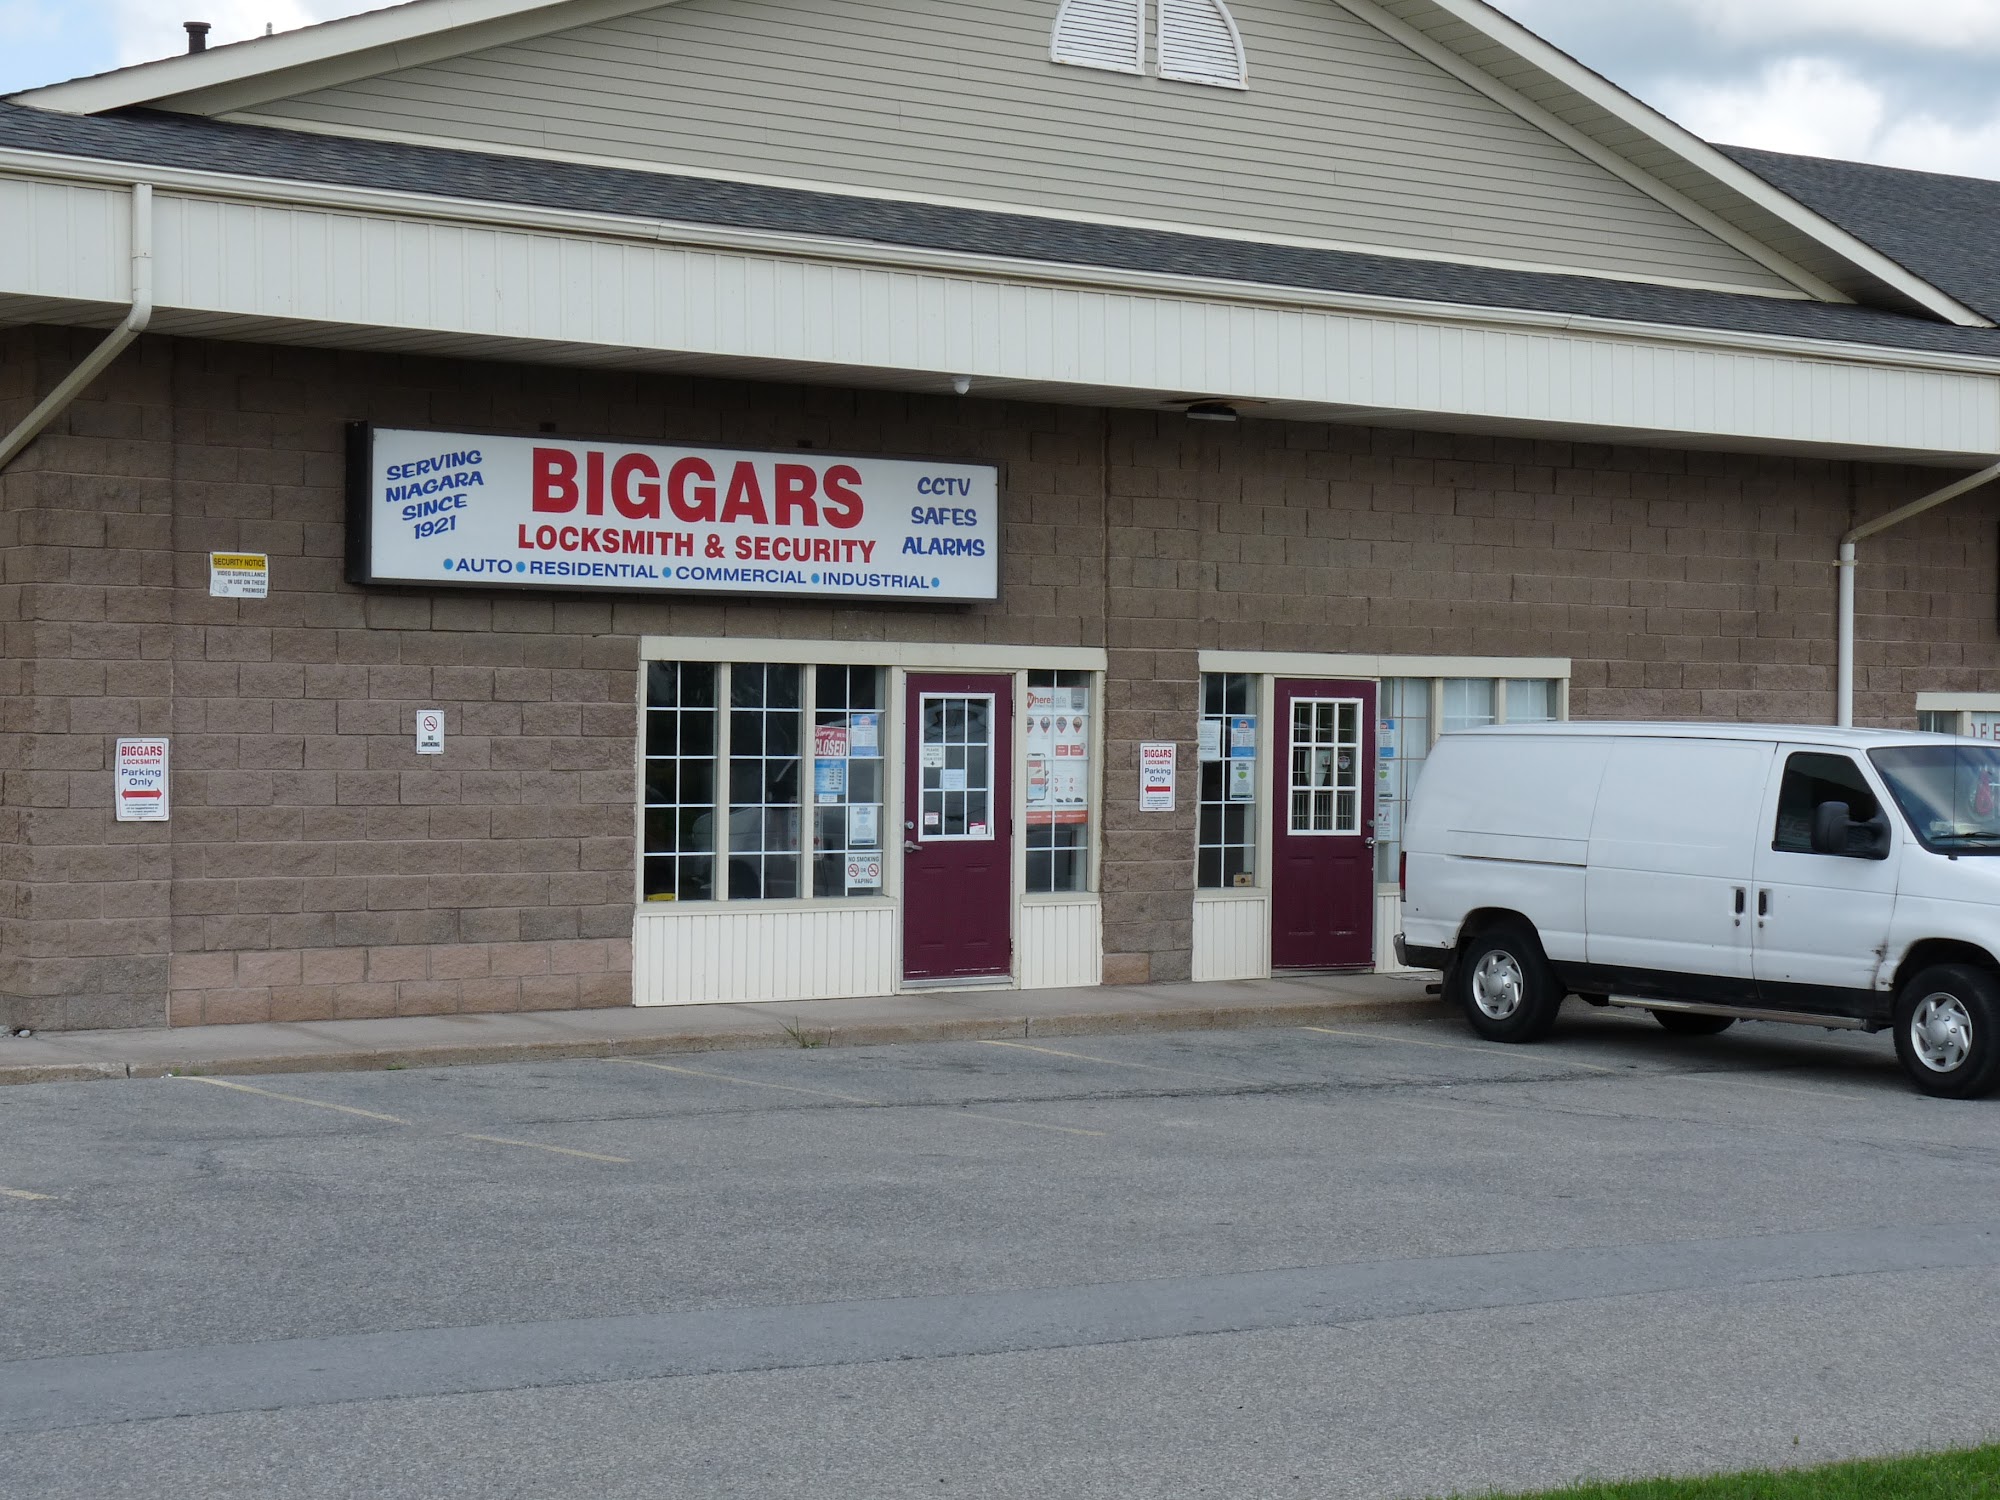 Biggar's Key Shop